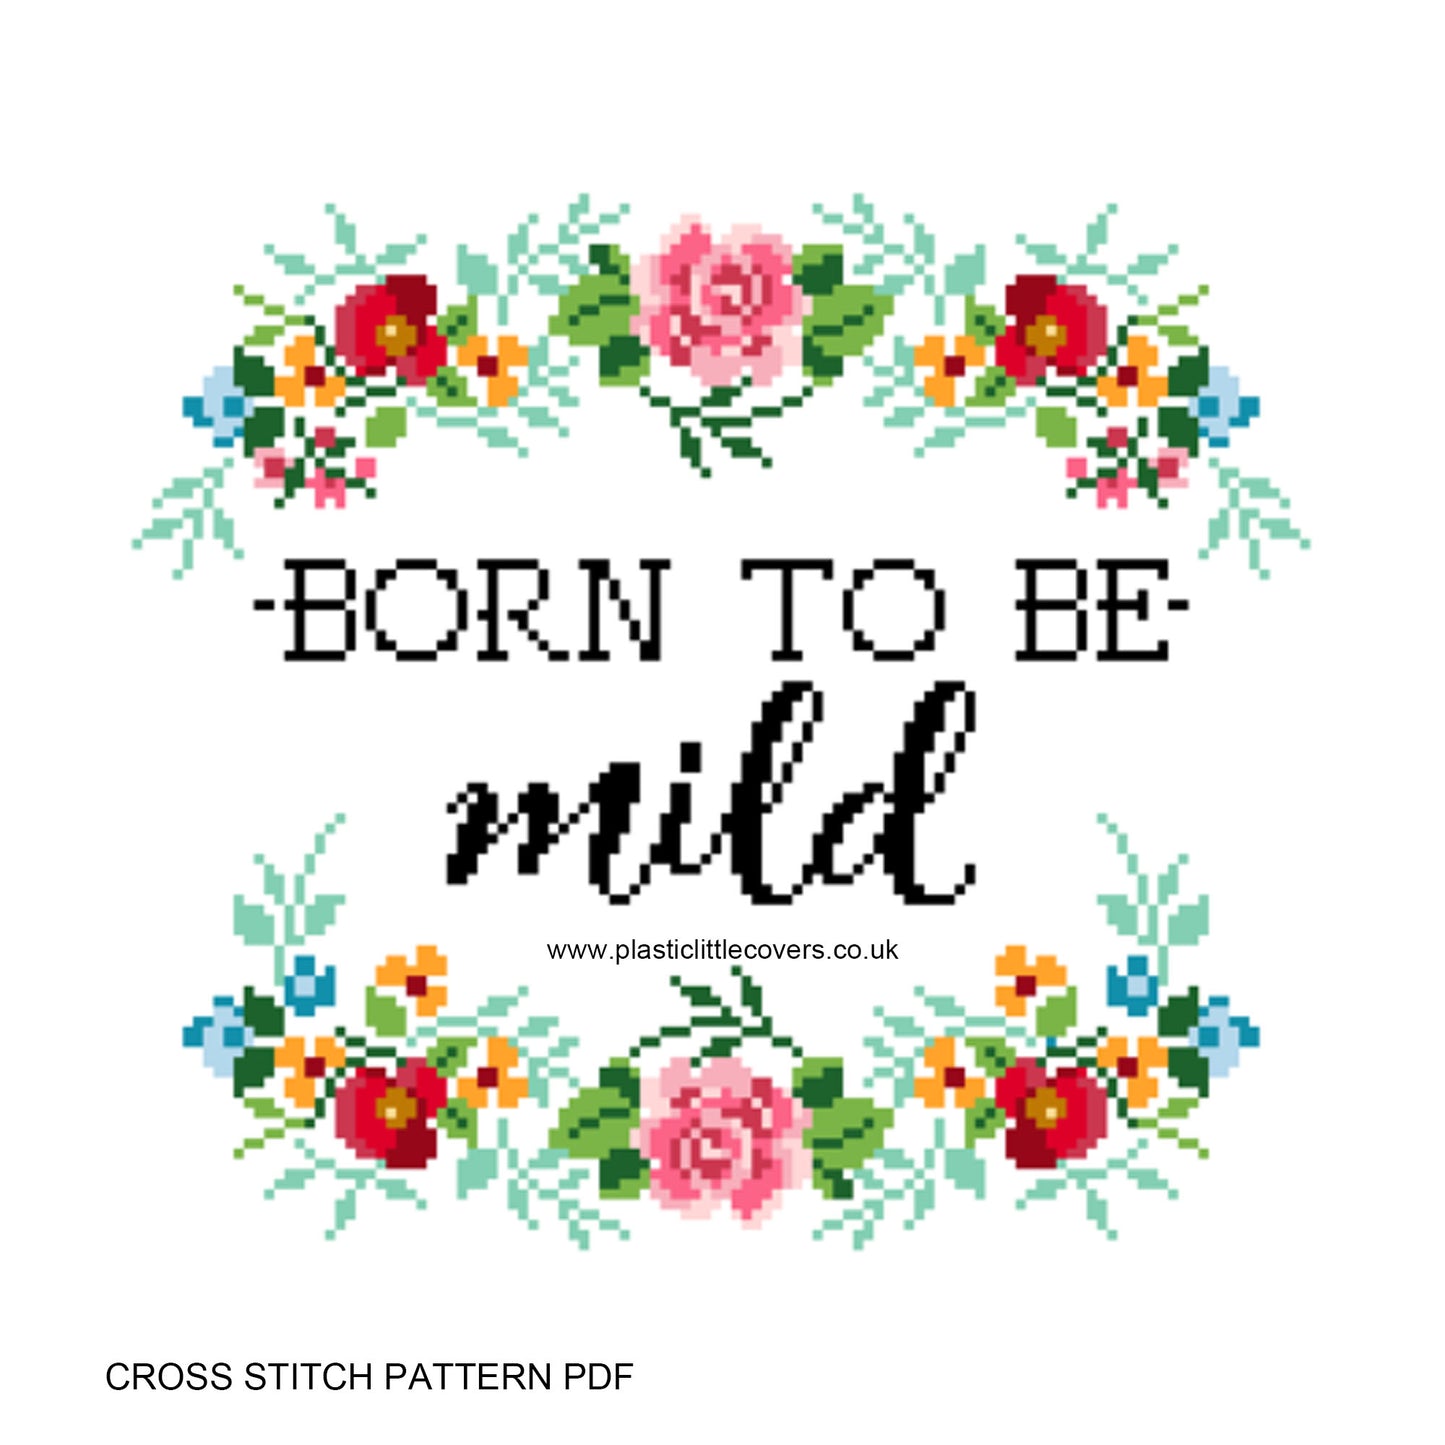 Born to Be Mild - Cross Stitch Pattern PDF.